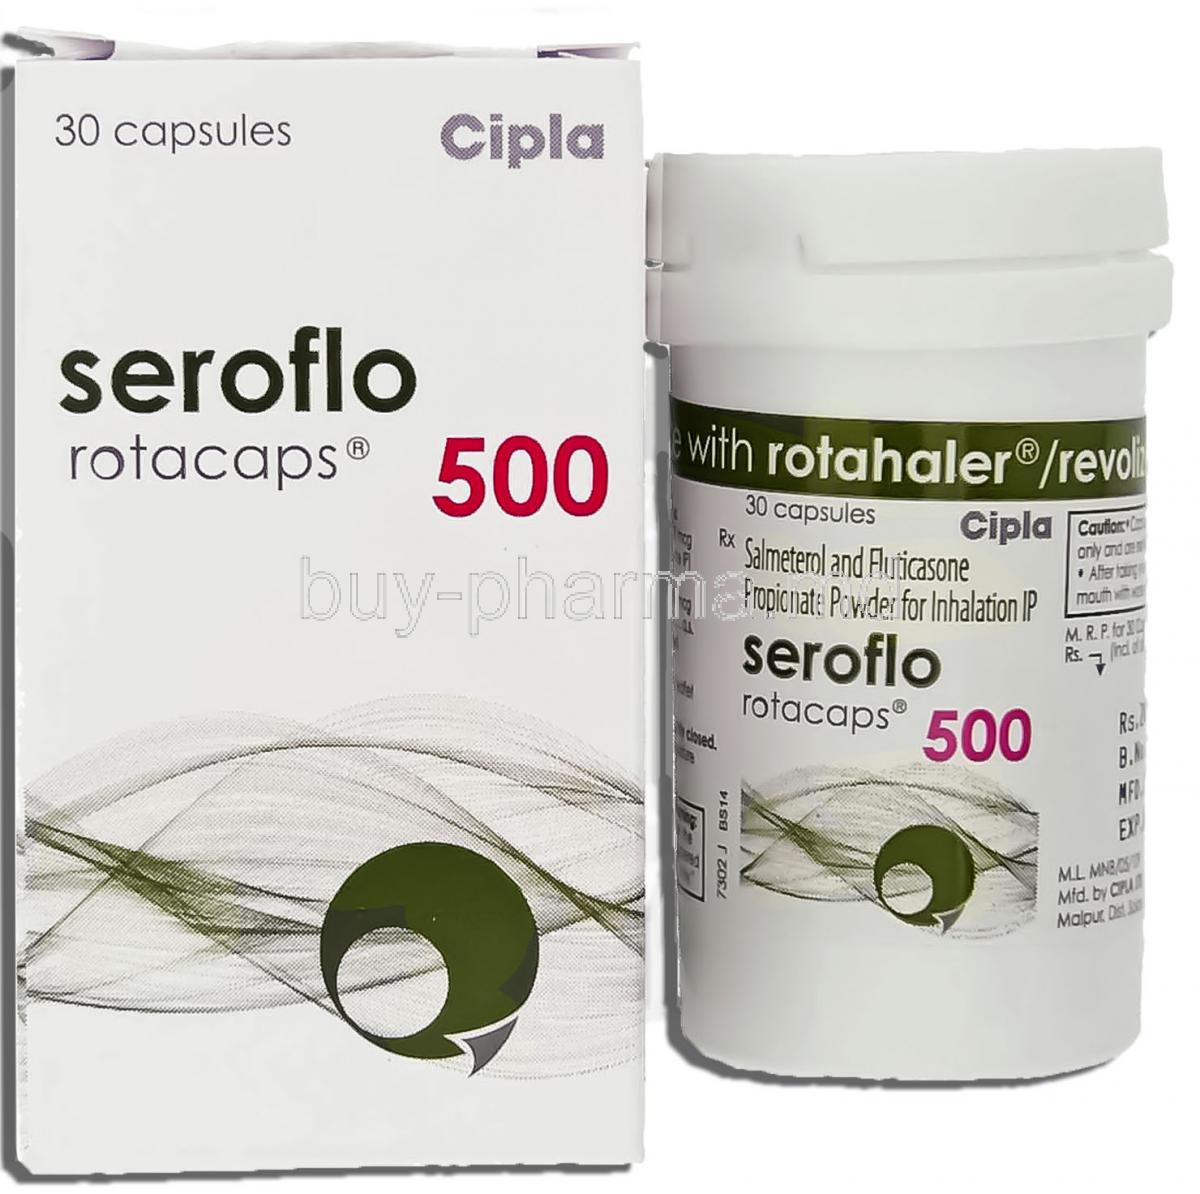 Seroflo, Generic Advair,  Salmeterol/ Fluticasone Propionate 50 Mcg/ 500 Mcg Rotacap (Cipla)